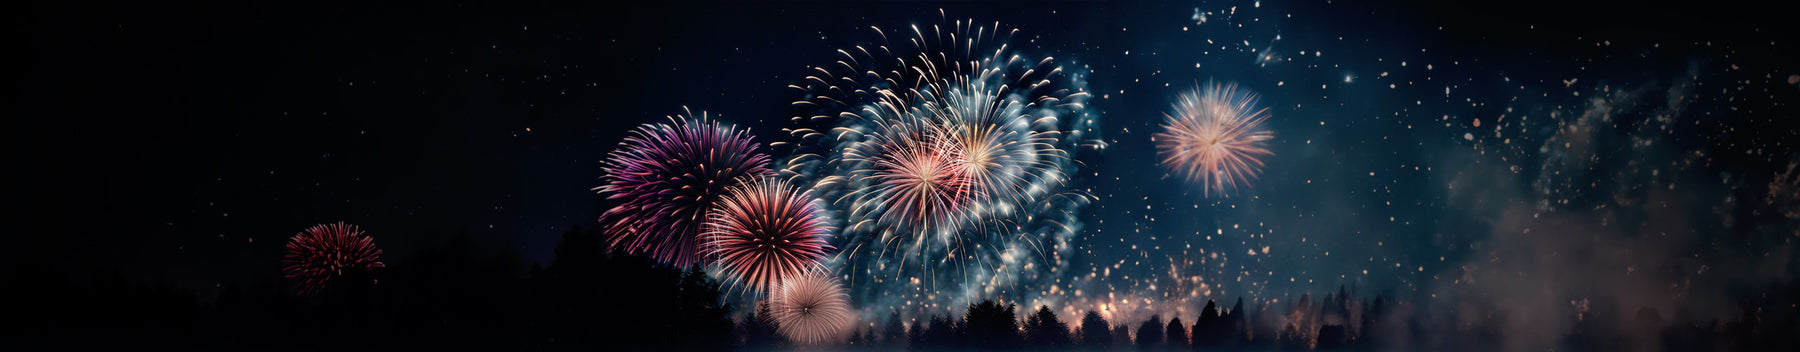 Celebrating Orthodox New Year with Dazzling Fireworks